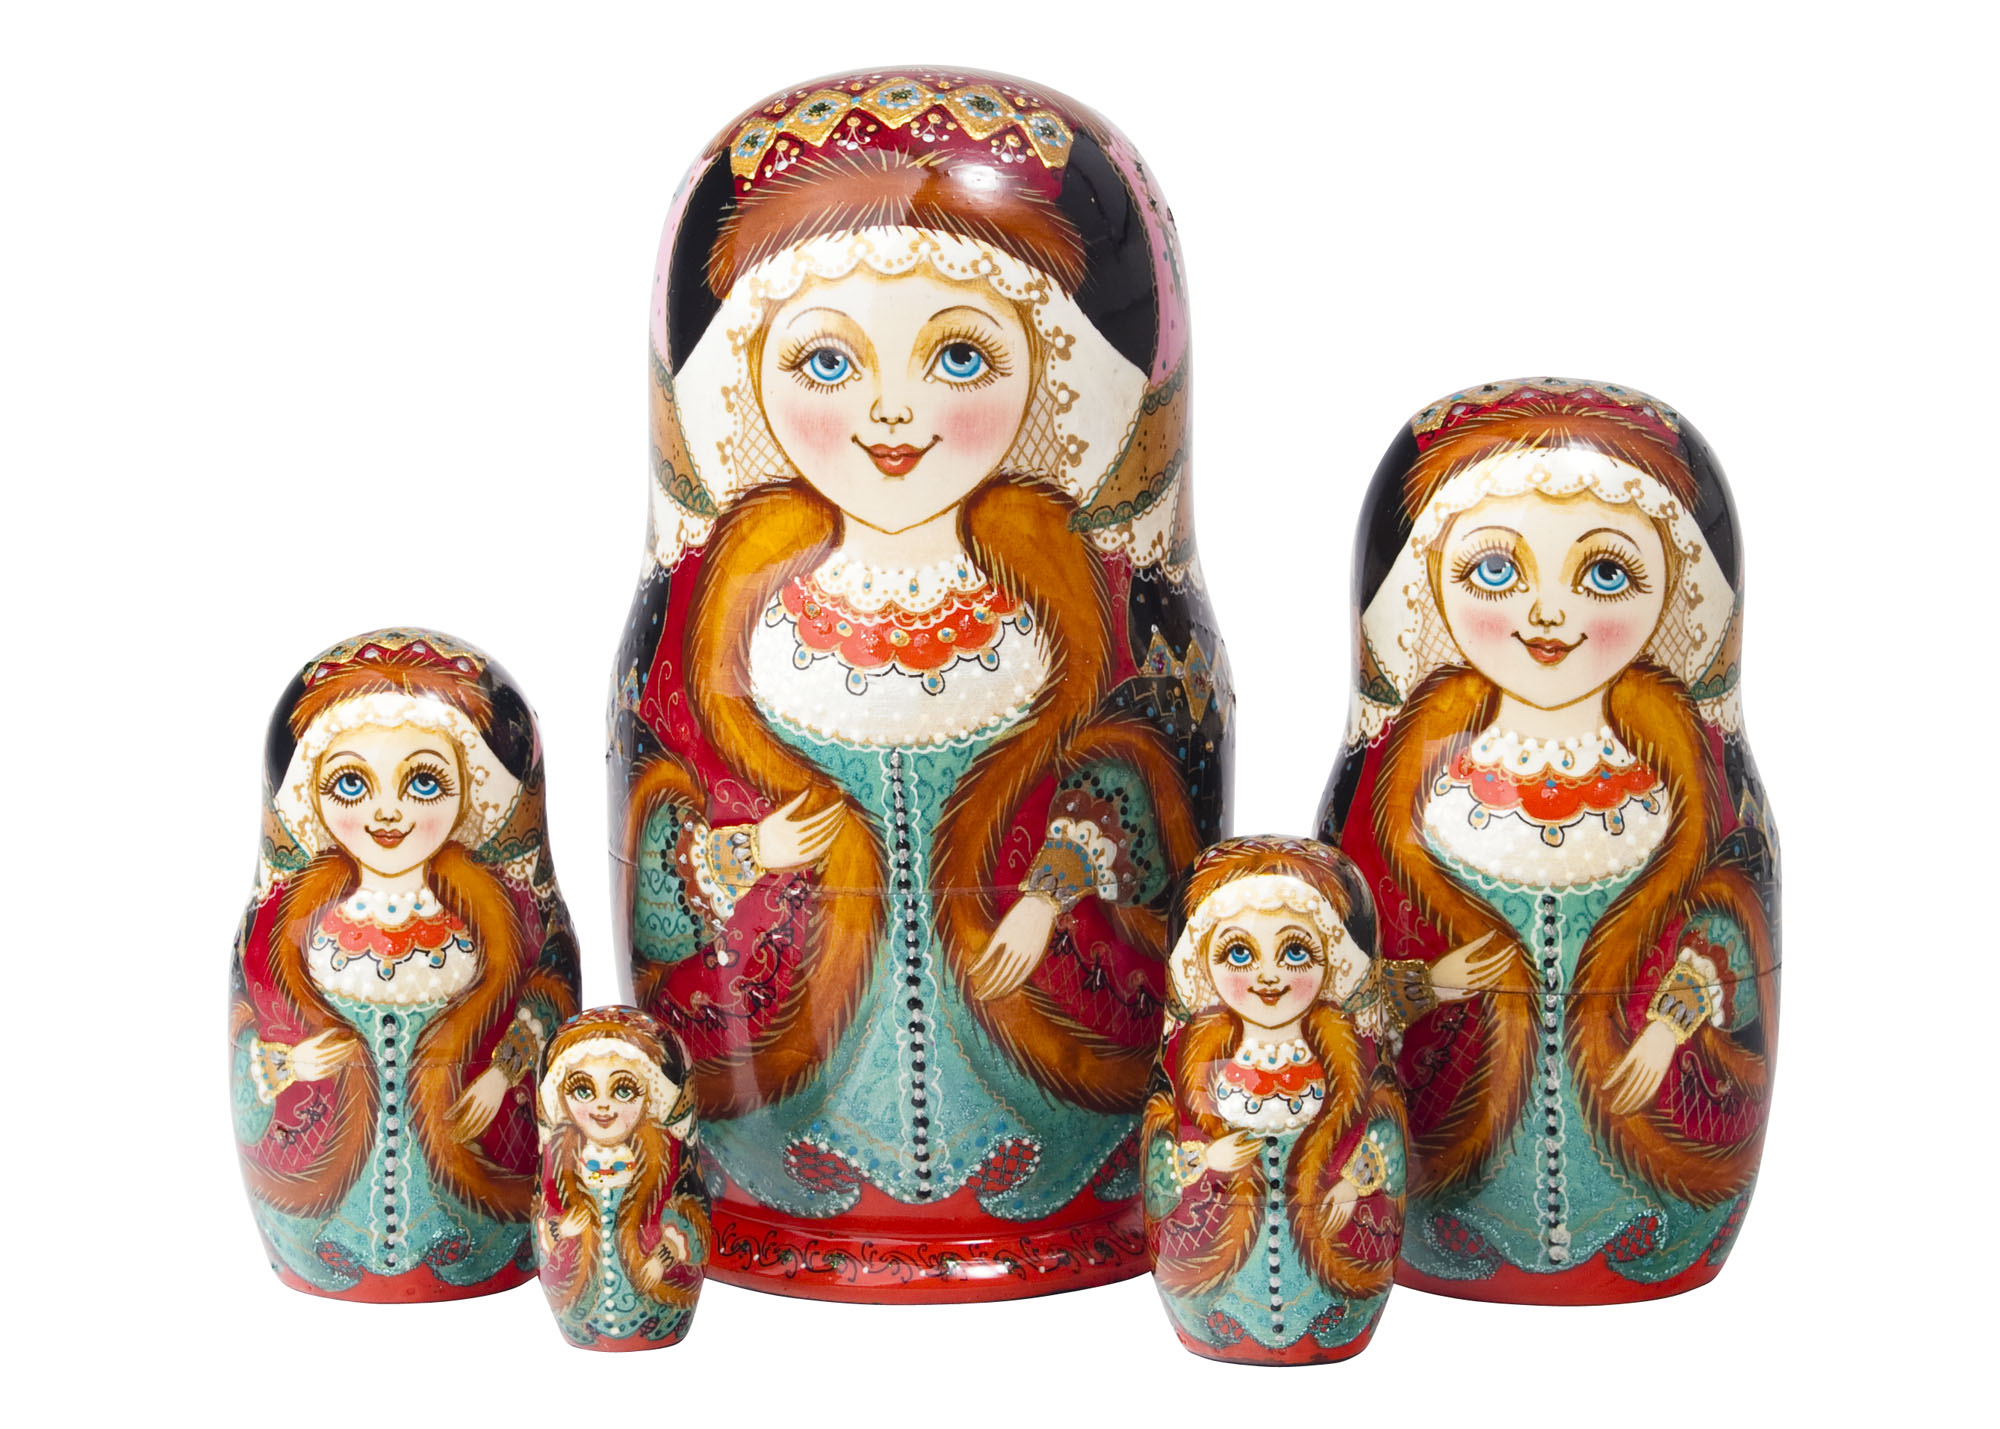 Buy Dunya Nesting Doll 5pc./6" at GoldenCockerel.com